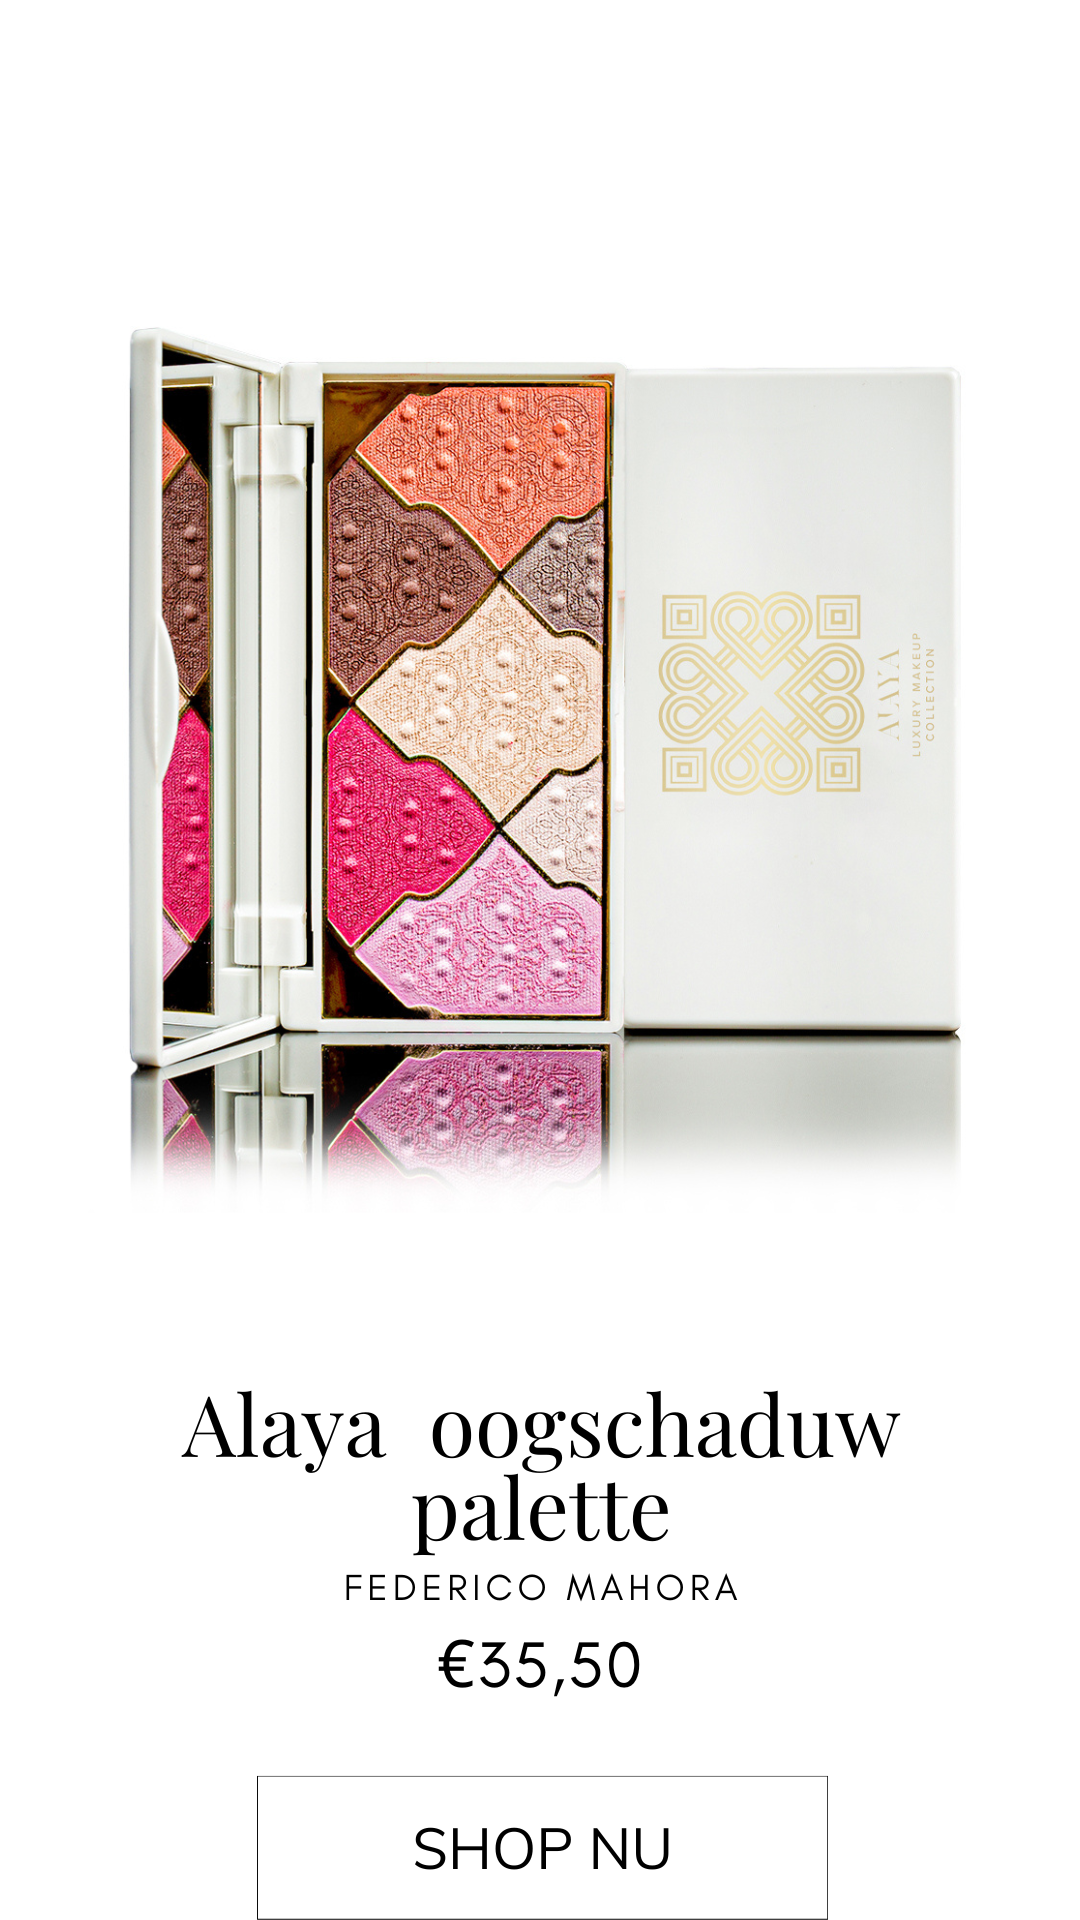 Parfumhuis | FM Alaya oogschaduw palette